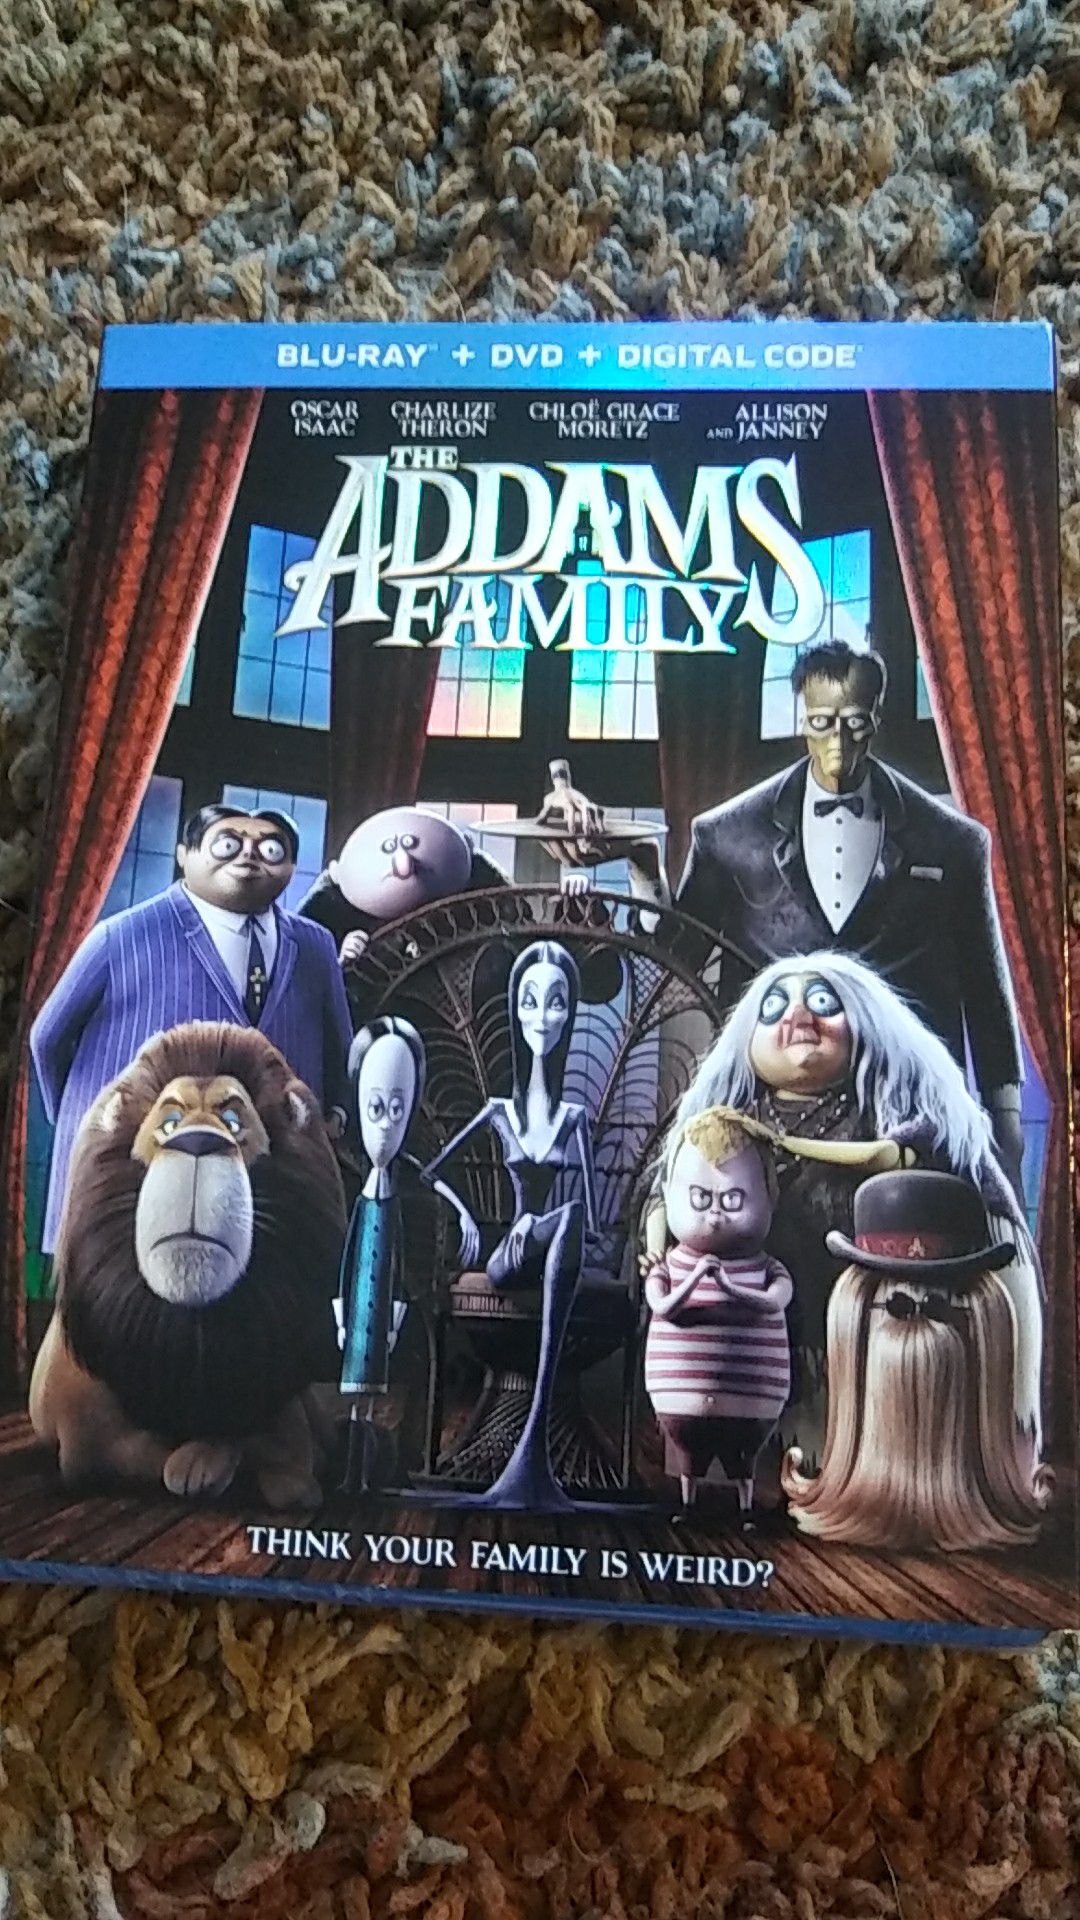 The Addams family blu-ray